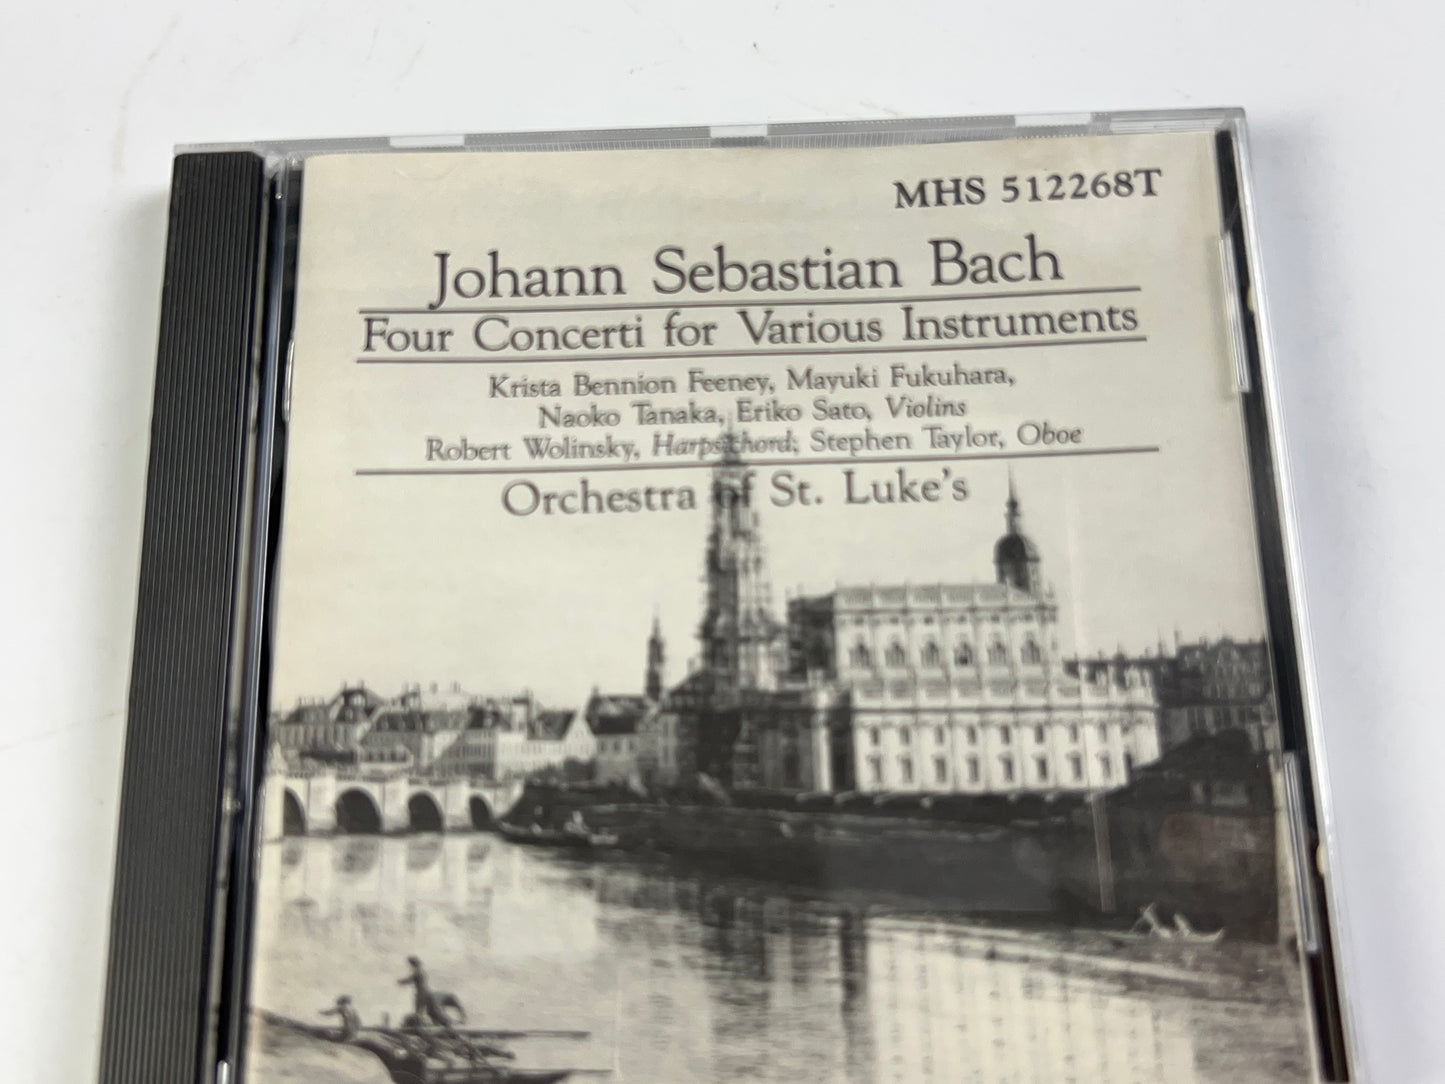 Johann Sebastian Bach Four Concerti for Various Instruments CD 1988